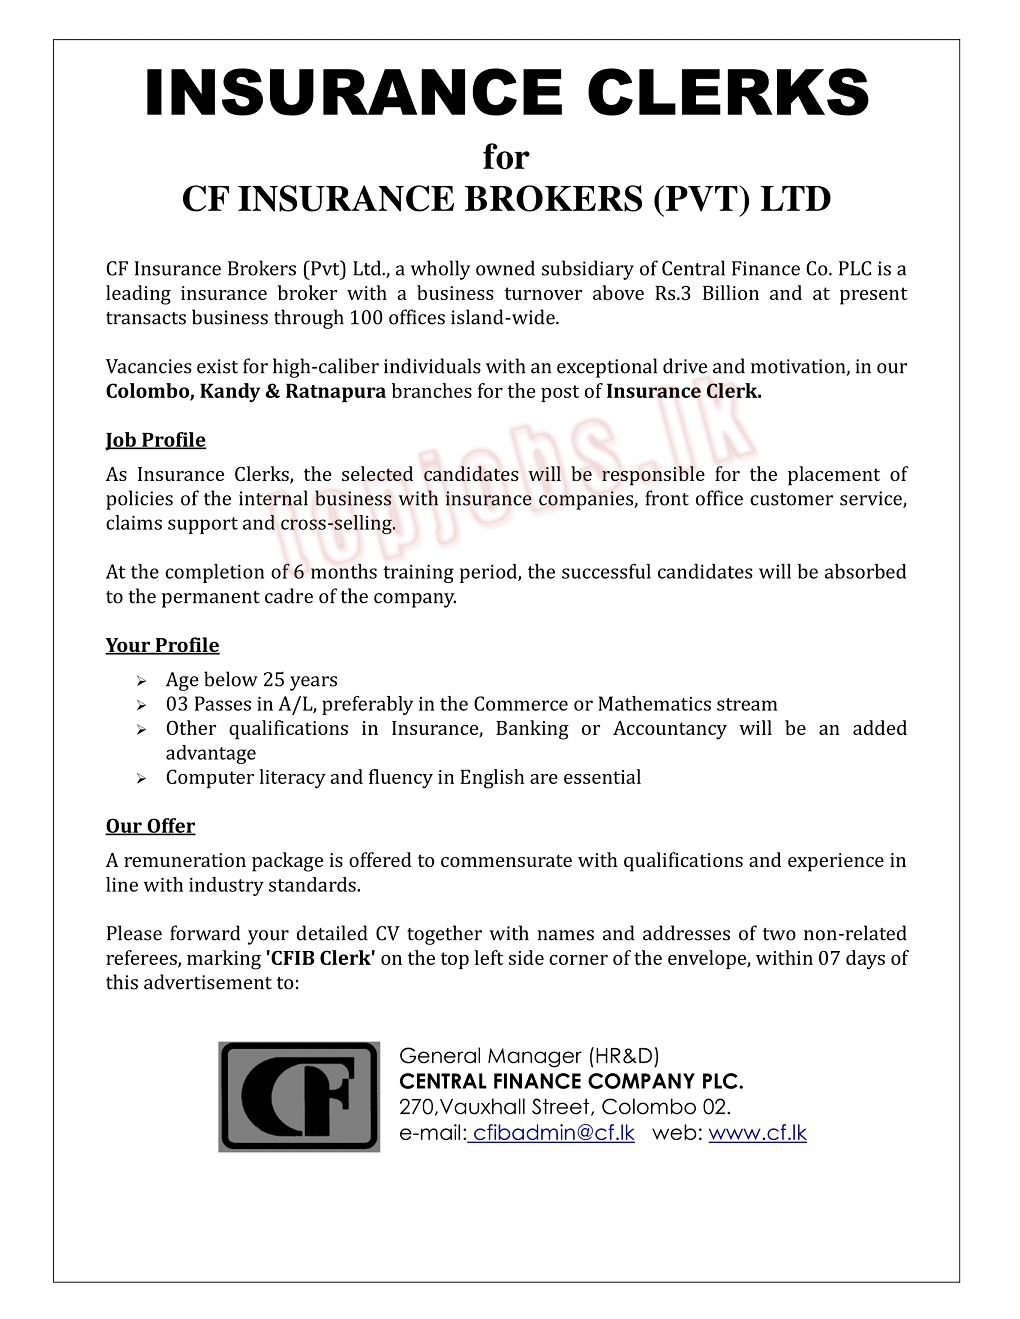 Insurance Clerks Vacancy at CF Insurance Brokers